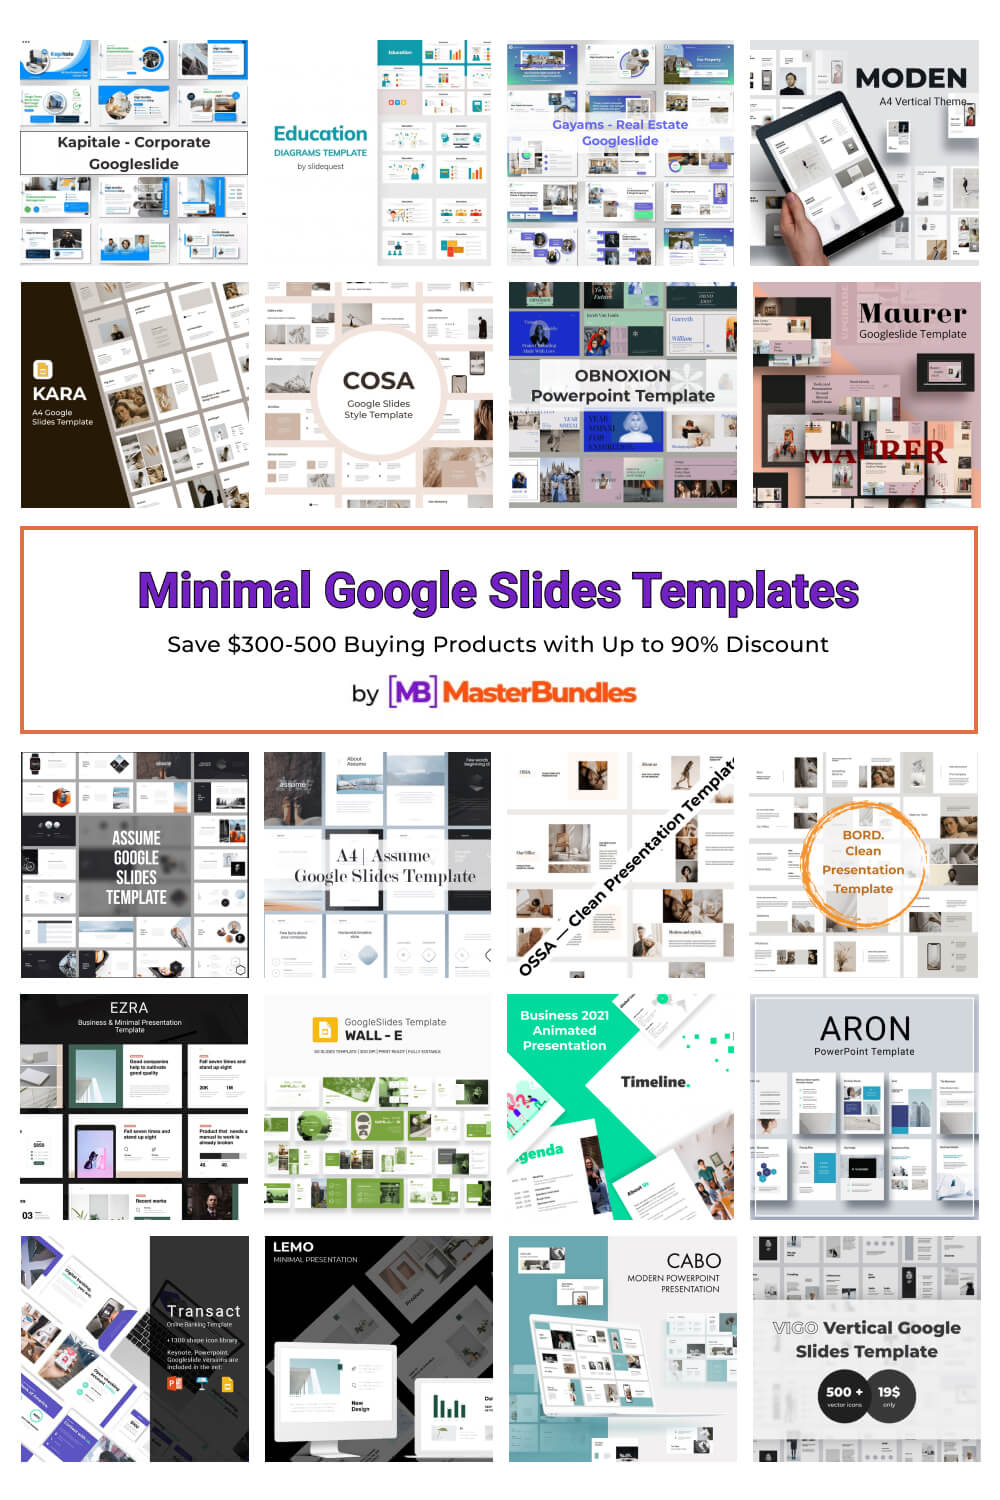 minimal google slides templates pinterest image.